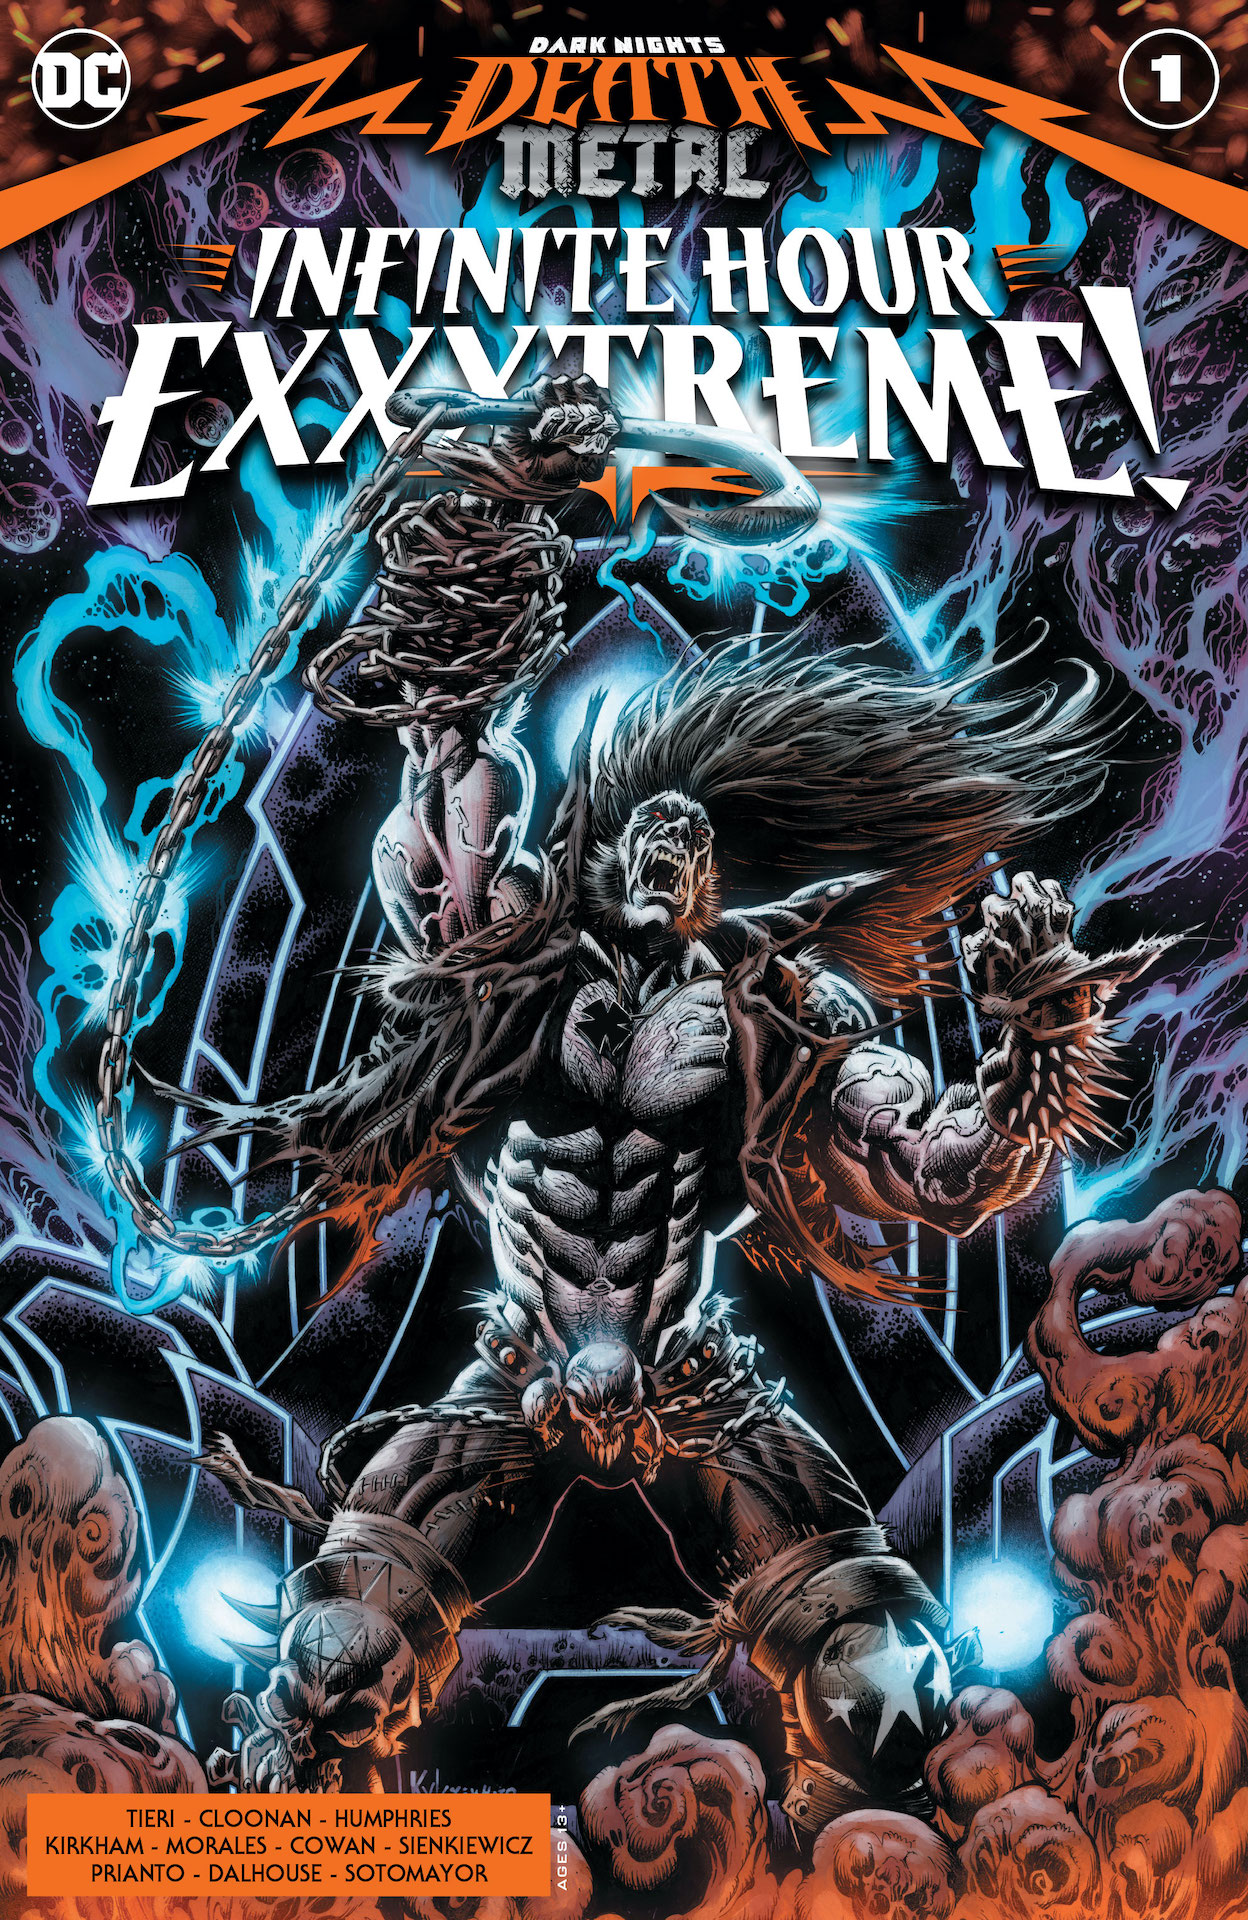 DC Preview: Dark Nights: Death Metal Infinite Hour Exxxtreme! #1